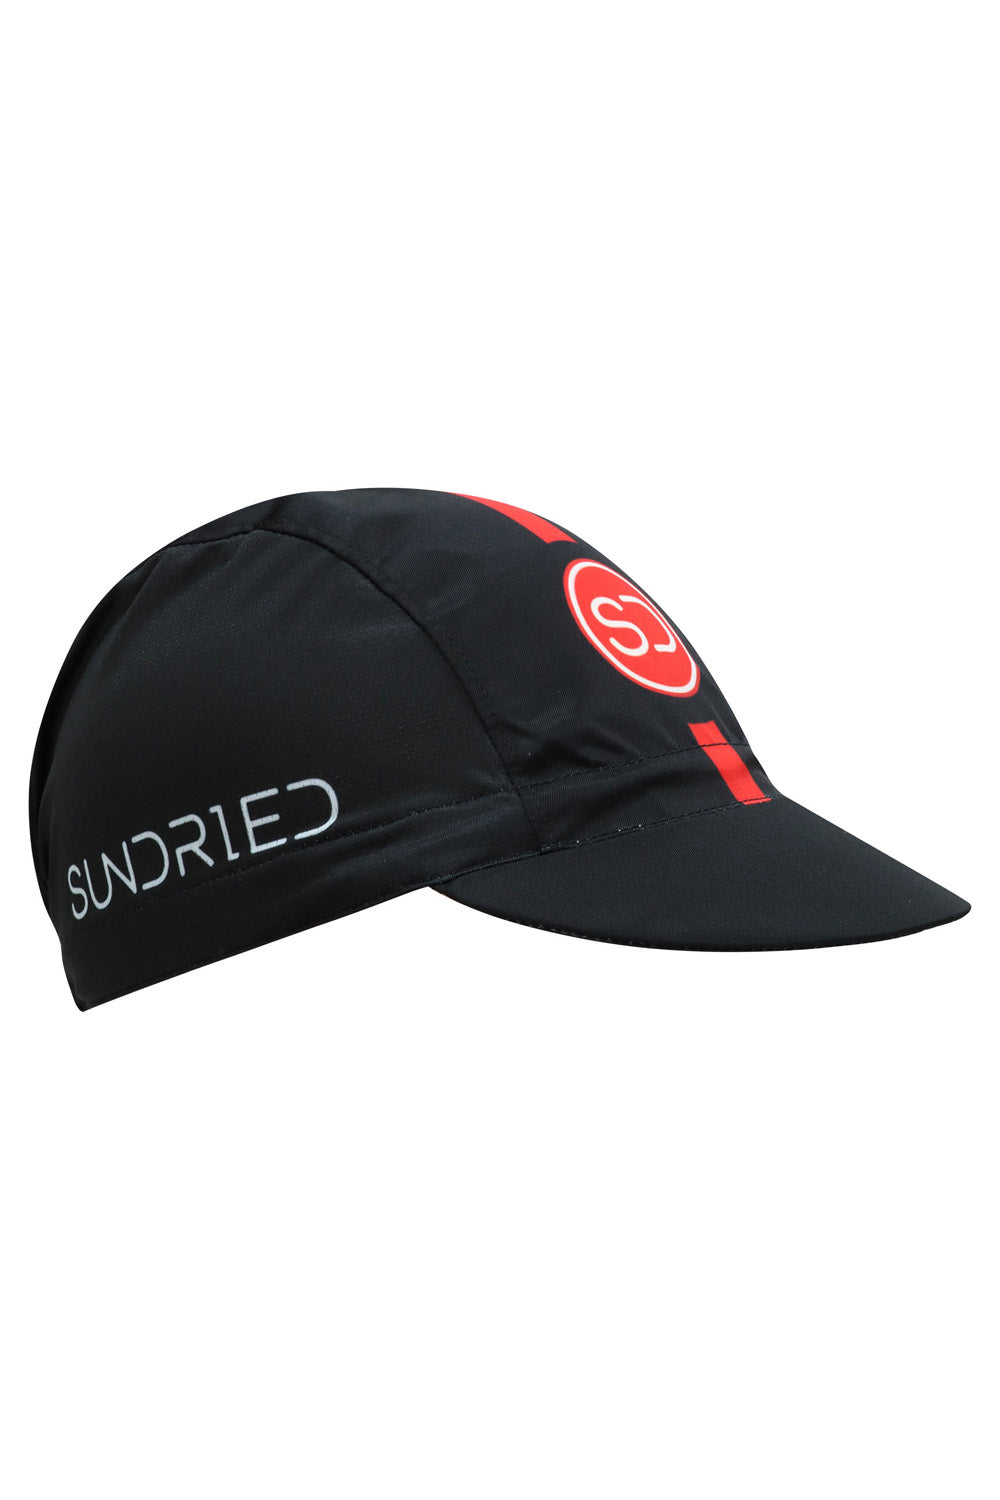 Sundried Mono Stripe Cycle Cap Hats Black SD0437 Black Activewear